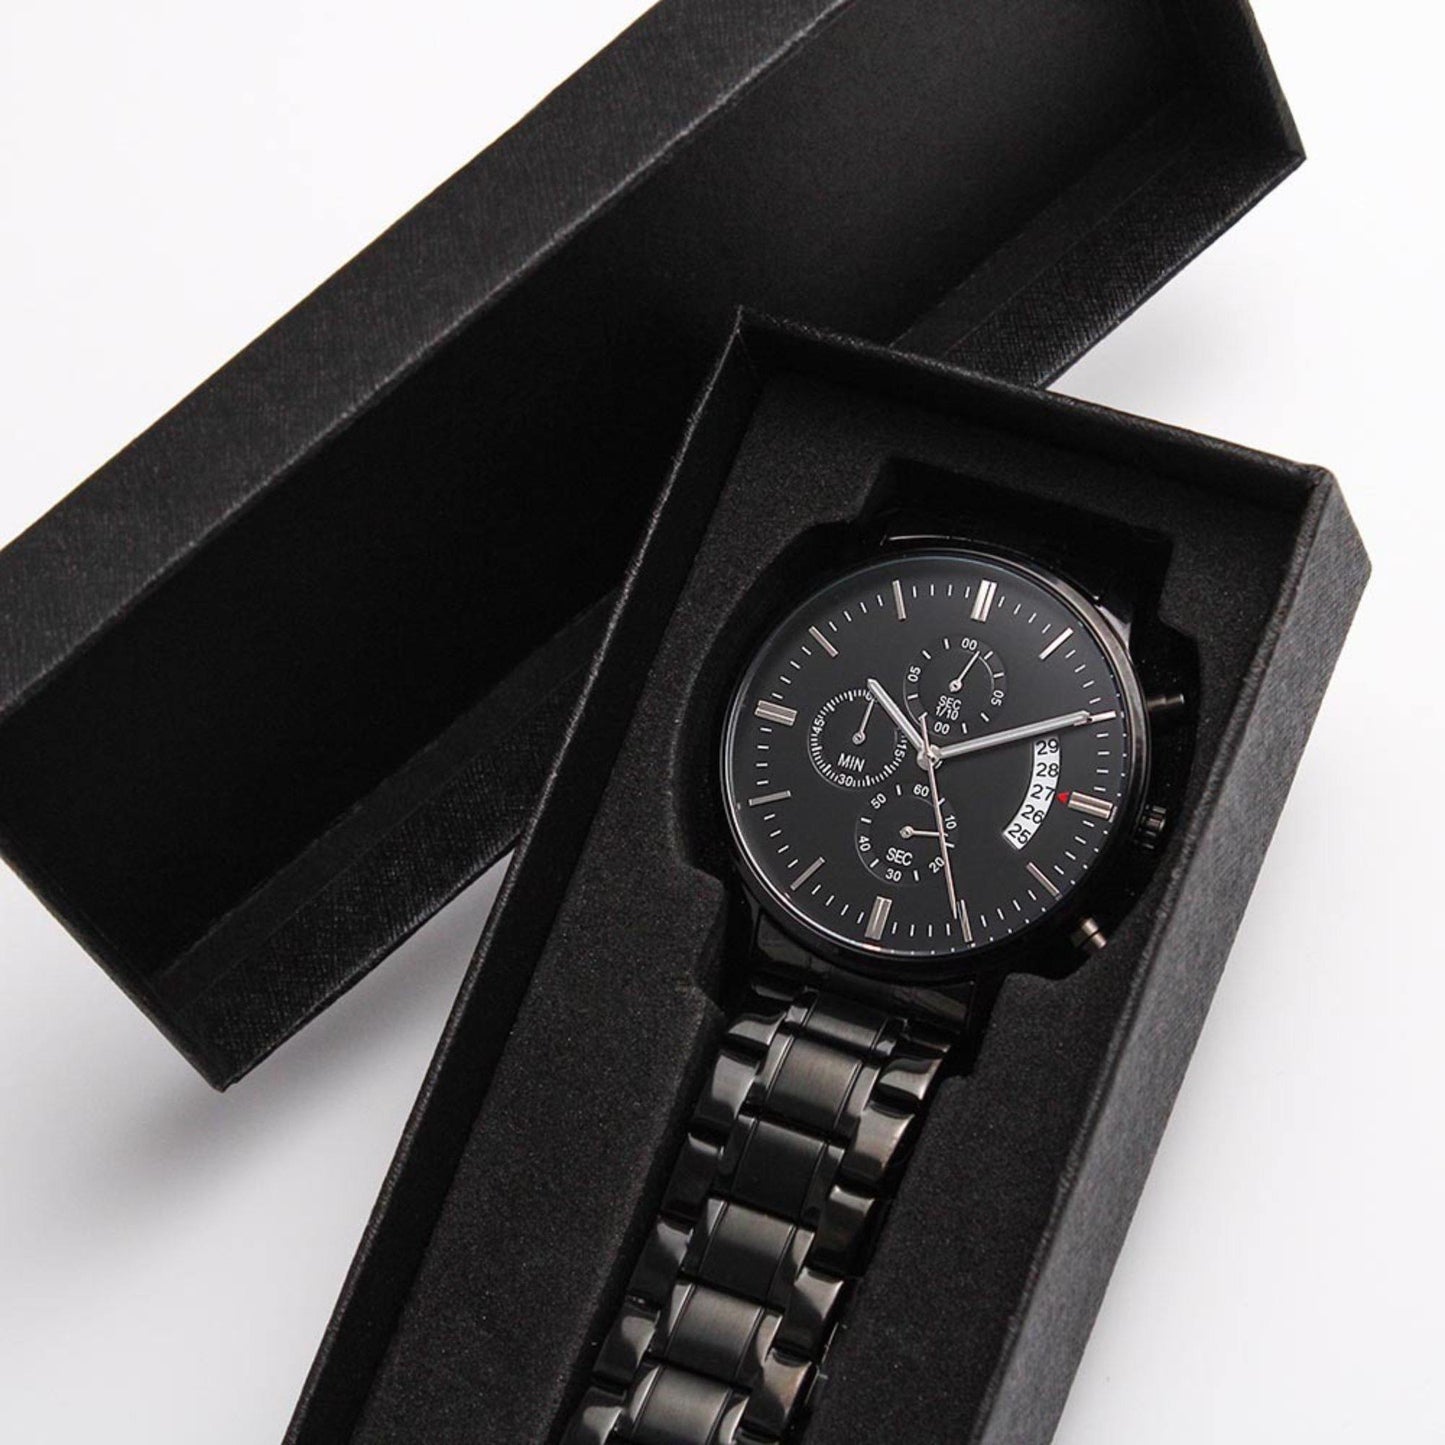 Personalized Name Black Chronograph Watch - Giftagic